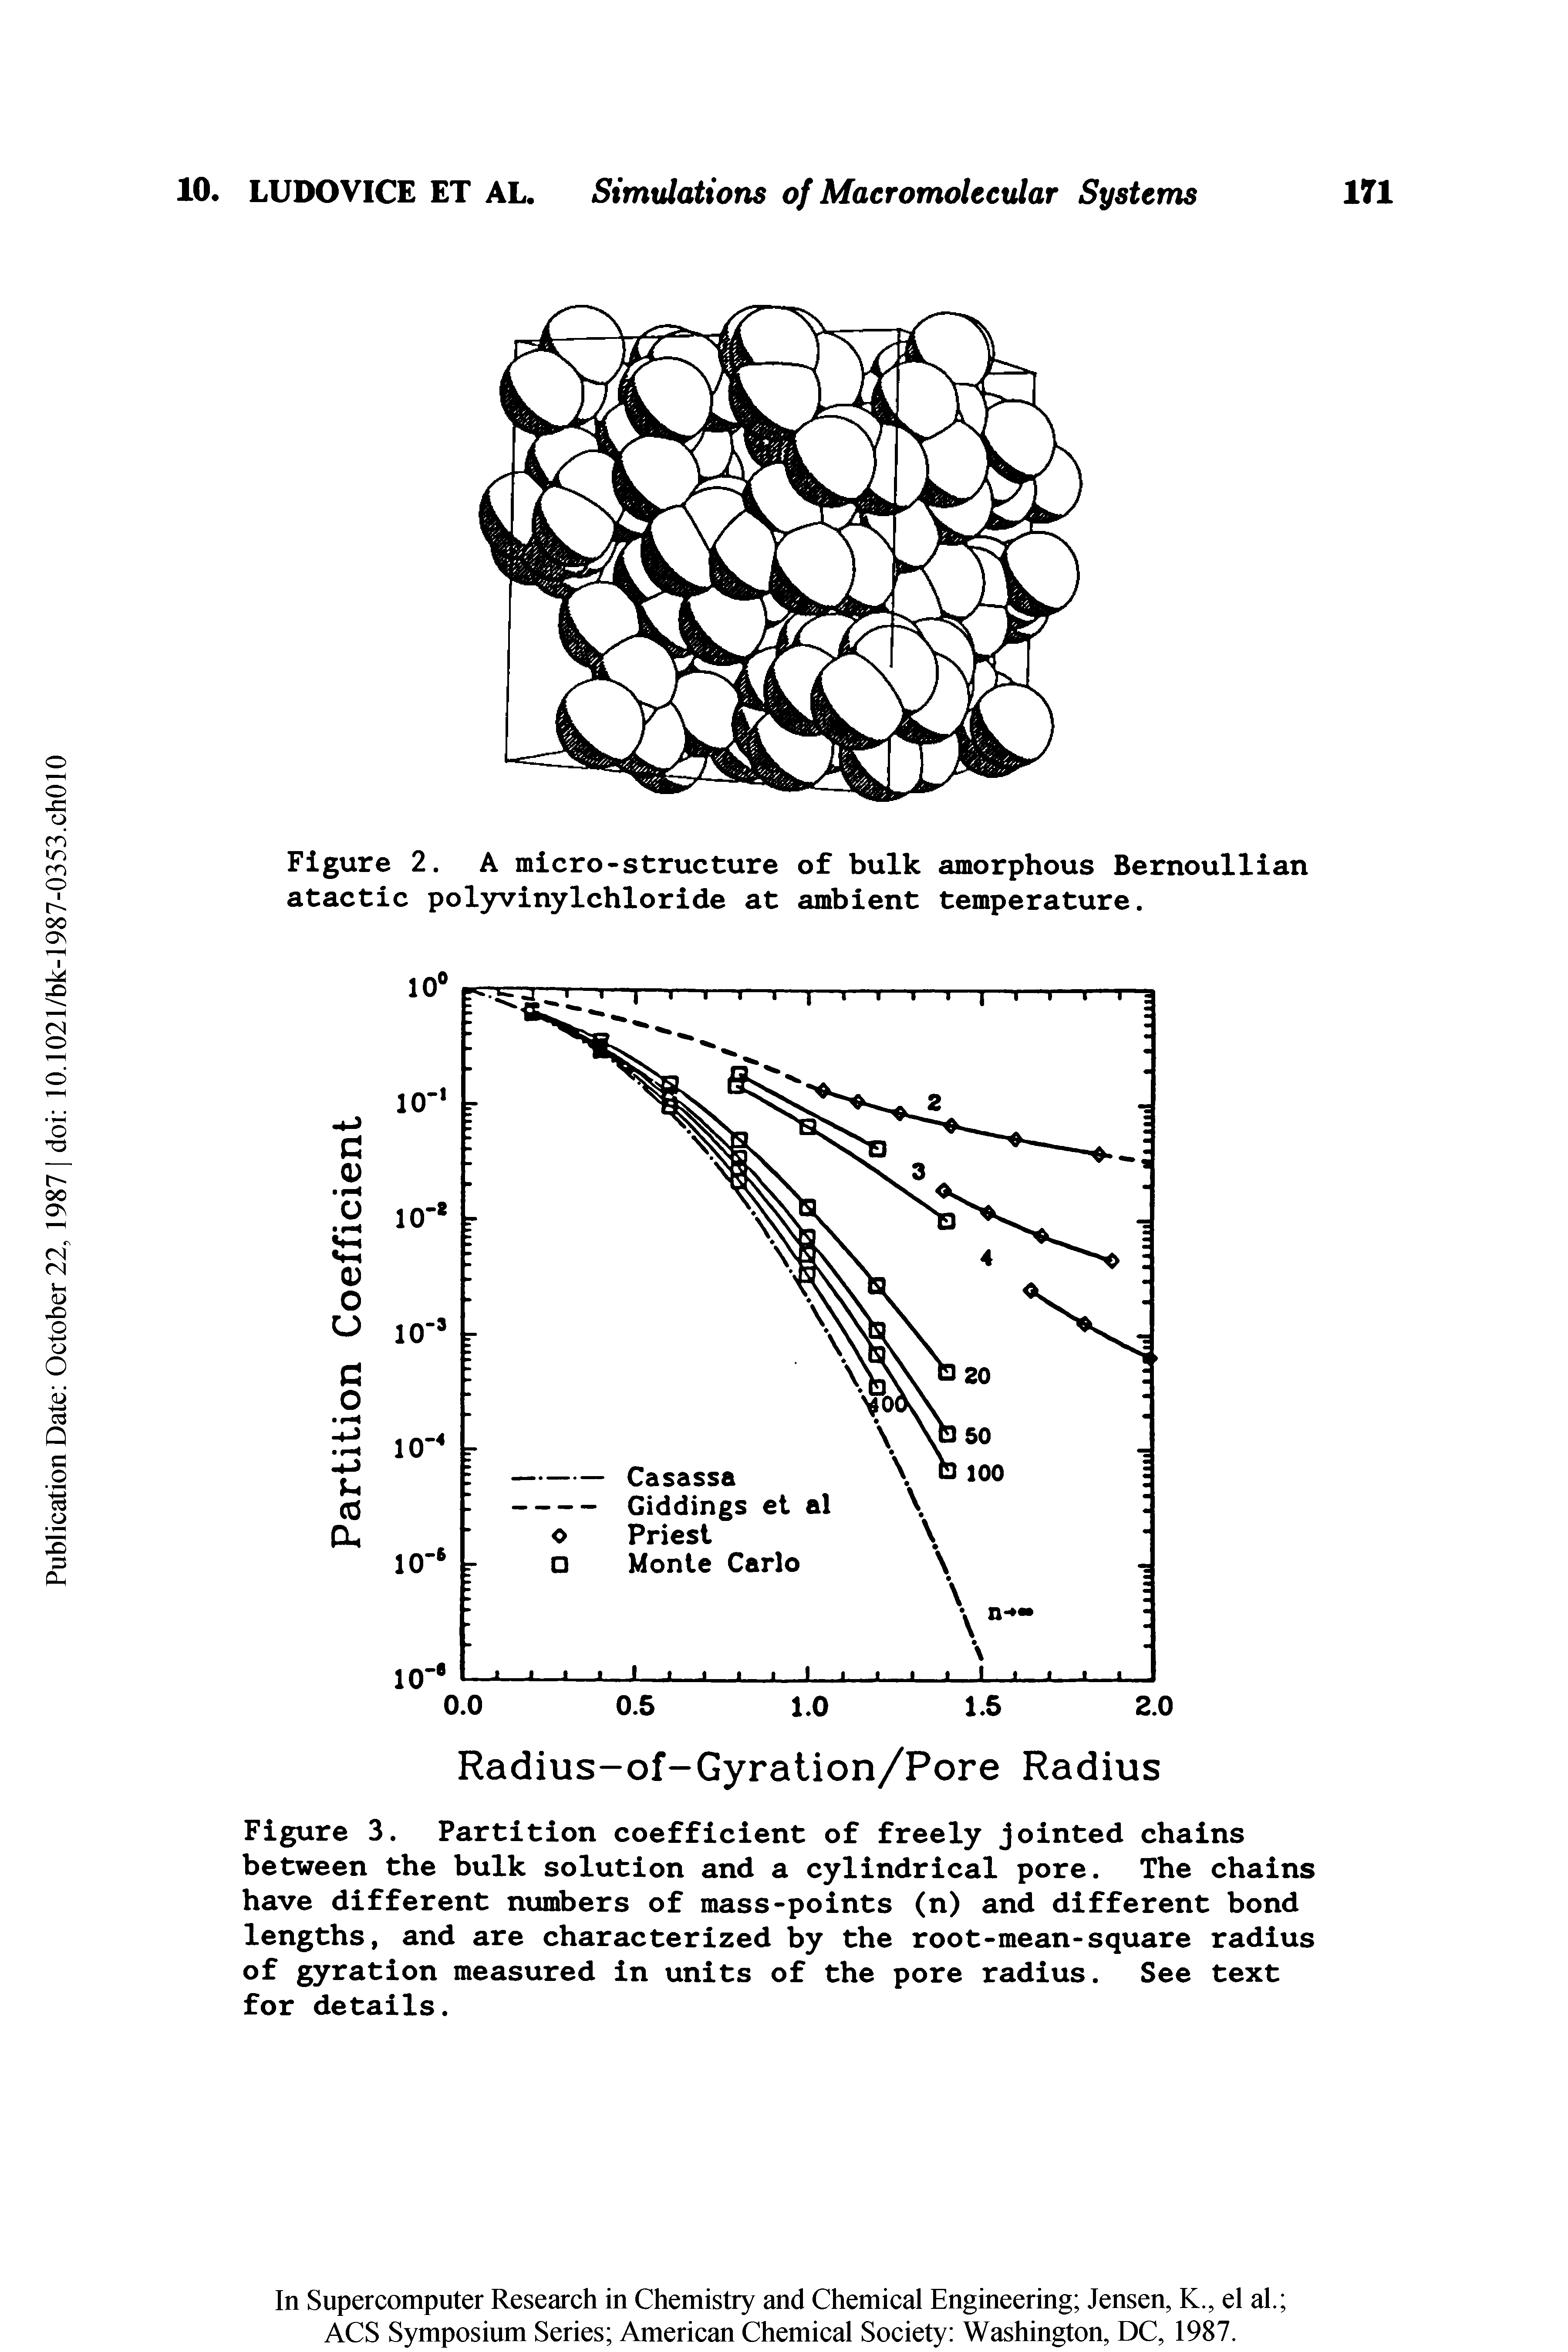 Figure 2. A micro-structure of bulk imorphous Bernoullian atactic polyvinylchloride at imbient temperature.